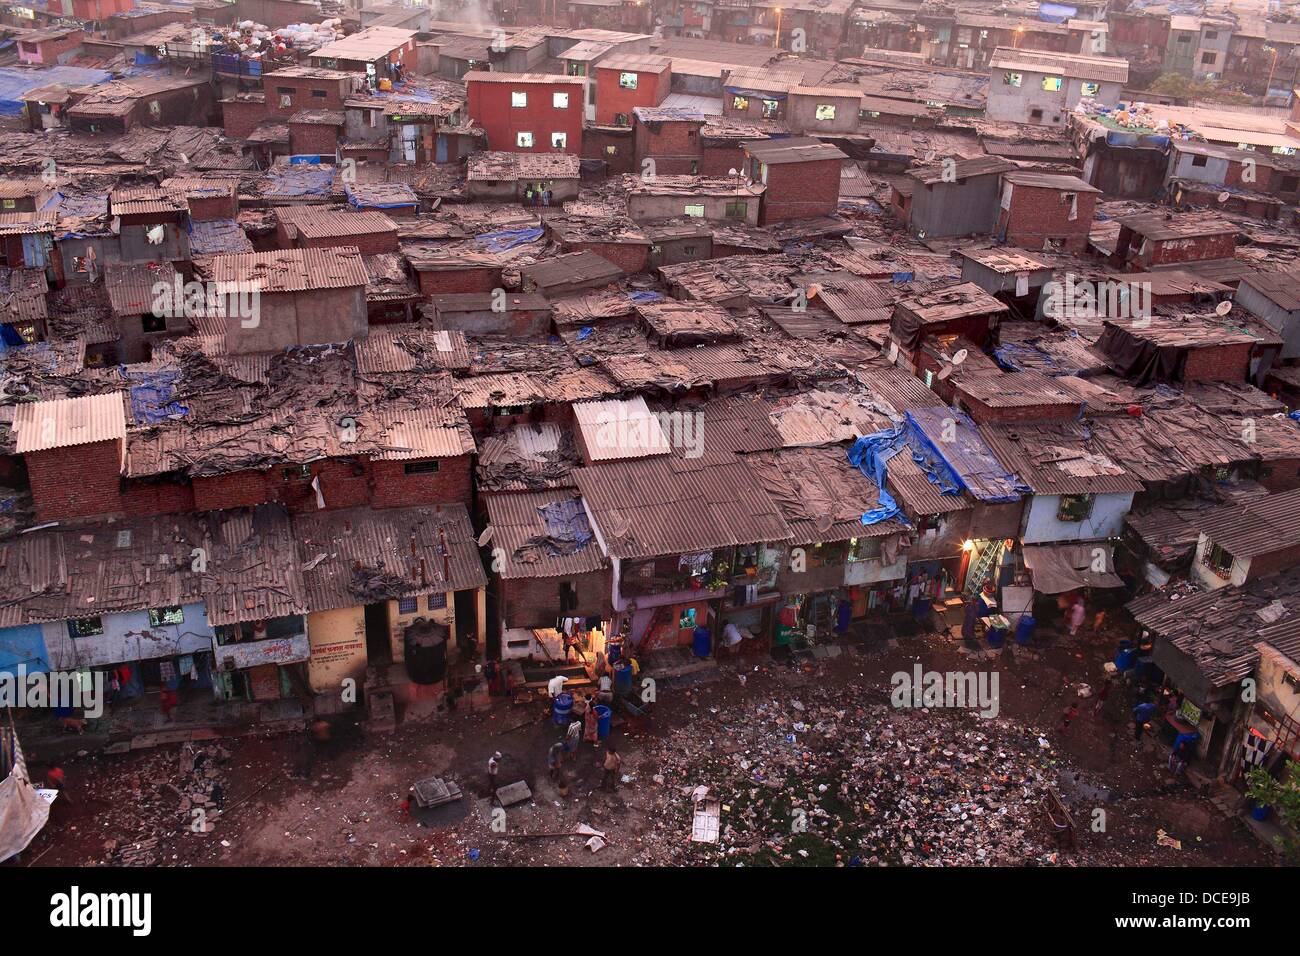 december-5-2011-mumbai-maharashtra-india-ariel-view-of-the-slums-at-DCE9JB.jpg